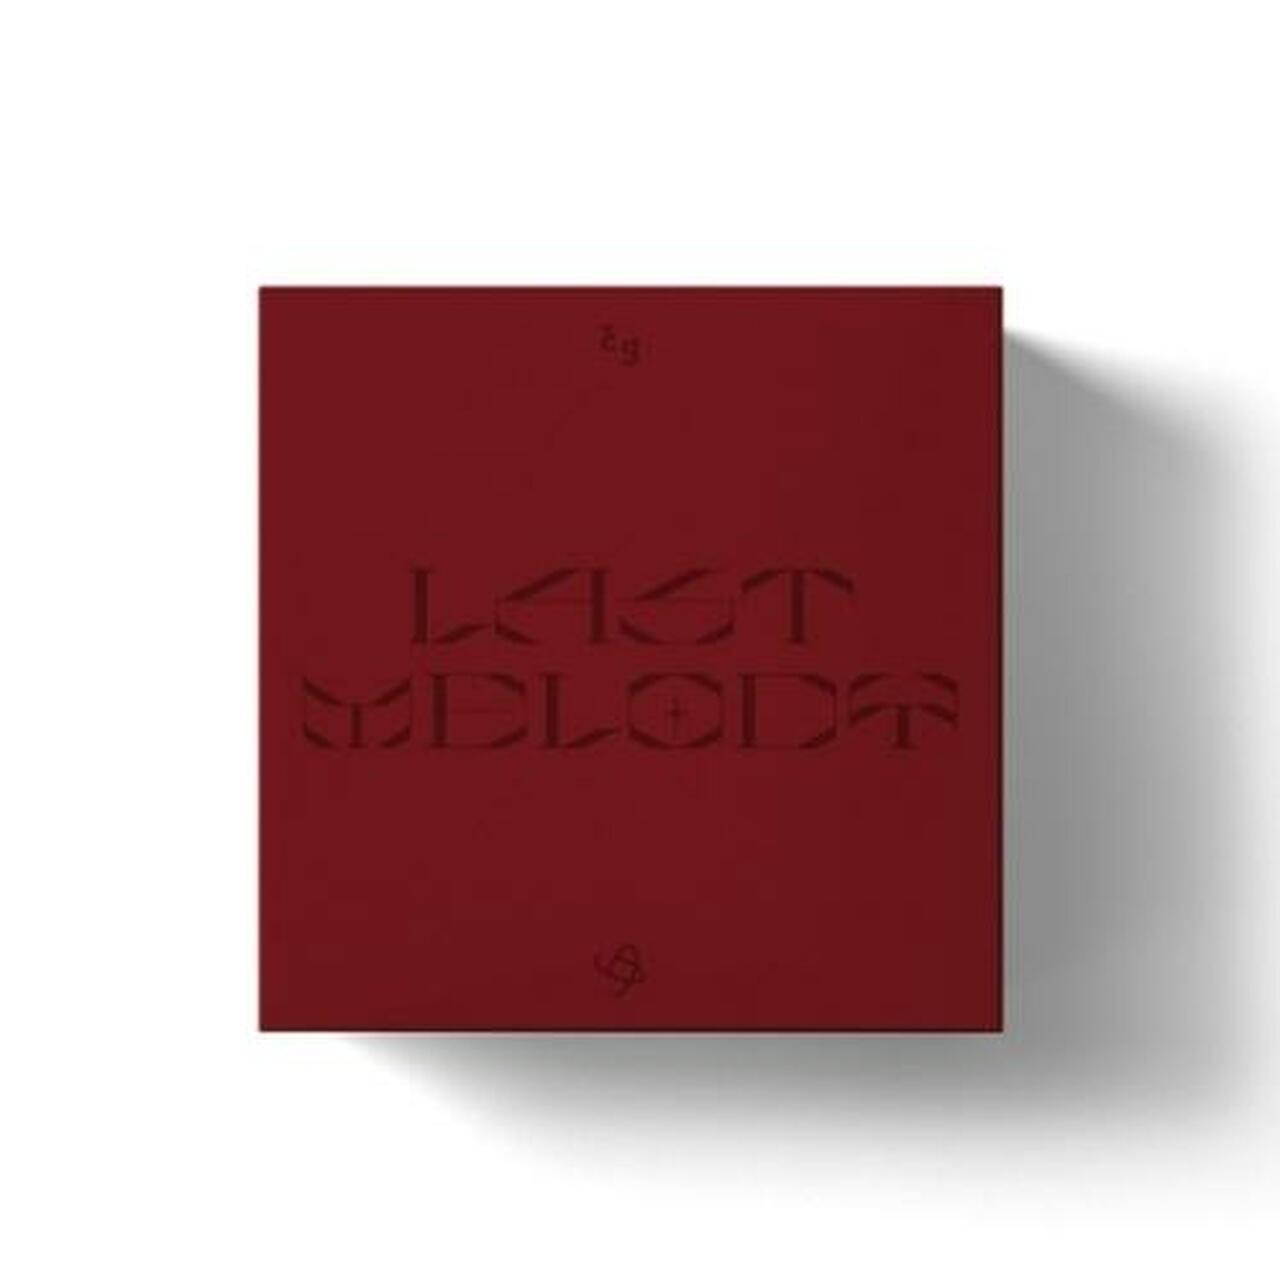 EVERGLOW - 3rd Single Album [LAST MELODY] - Pre-Order